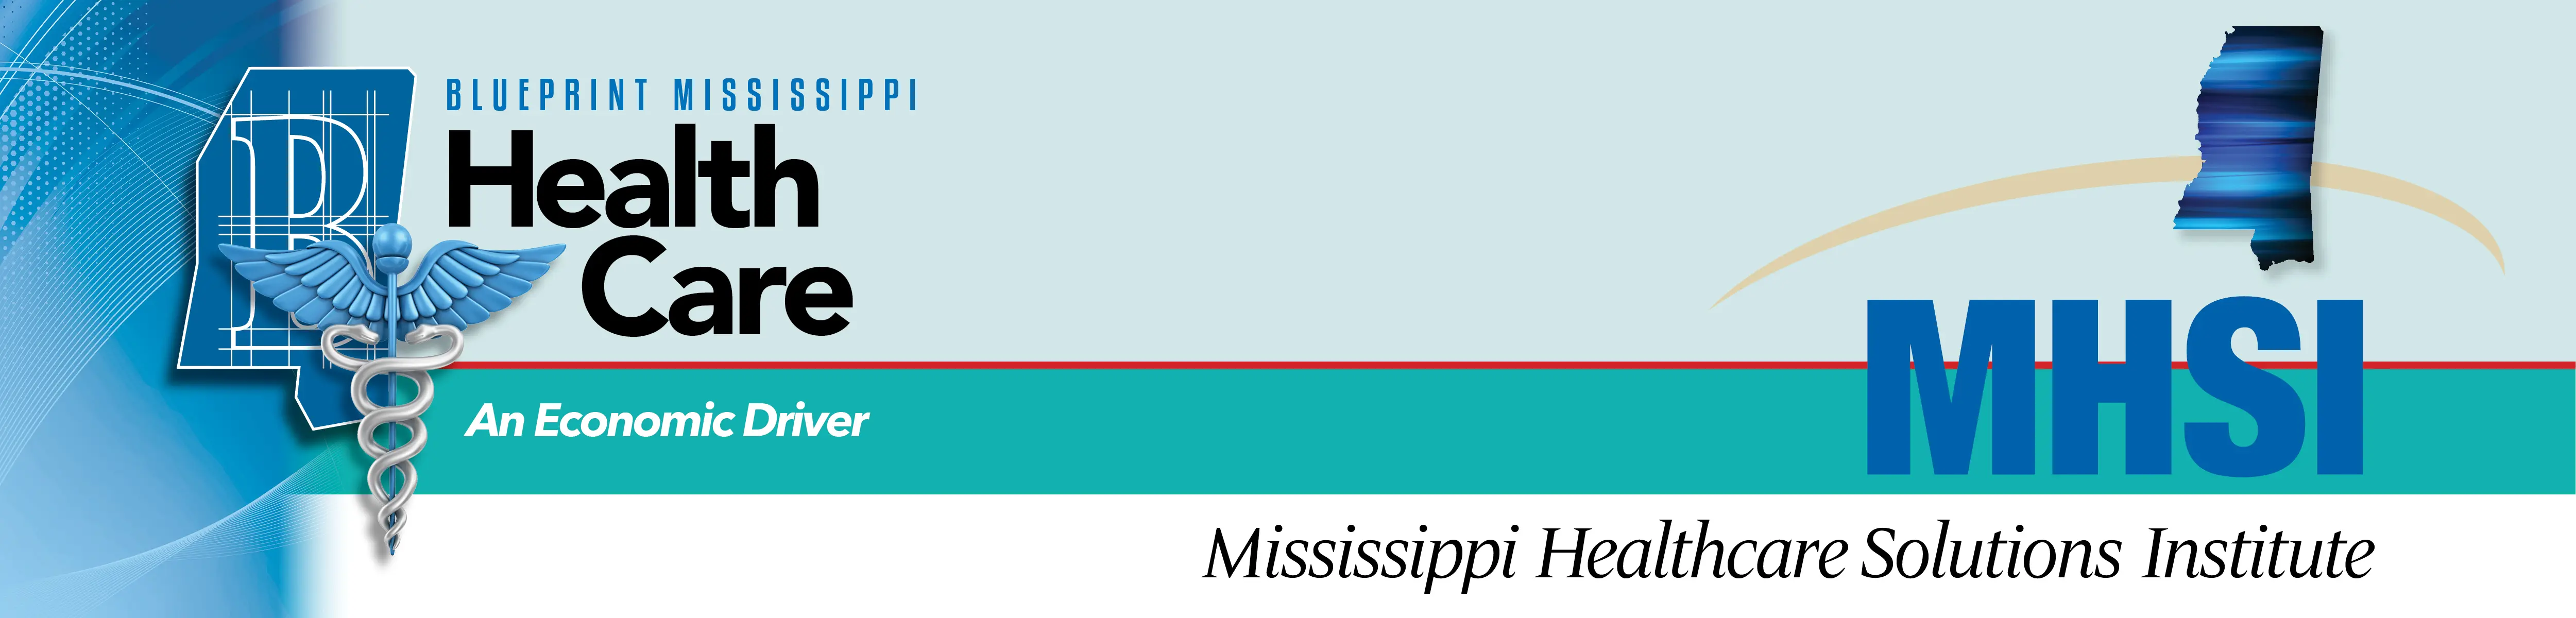 Mississippi Healthcare Solutions Institute